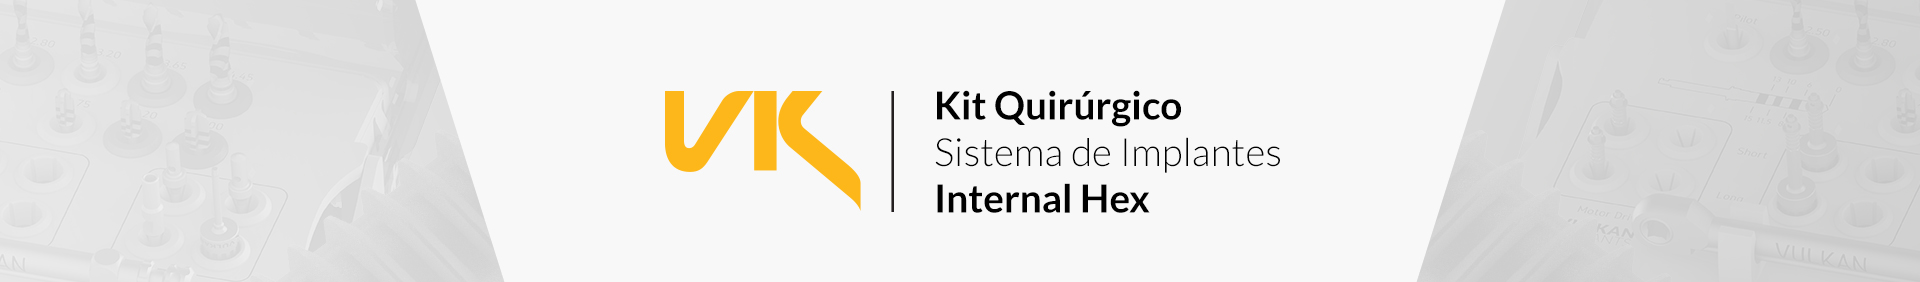 banner kit quirúrgico Sistema de Implantes Internal Hex. de Vulkan Implants